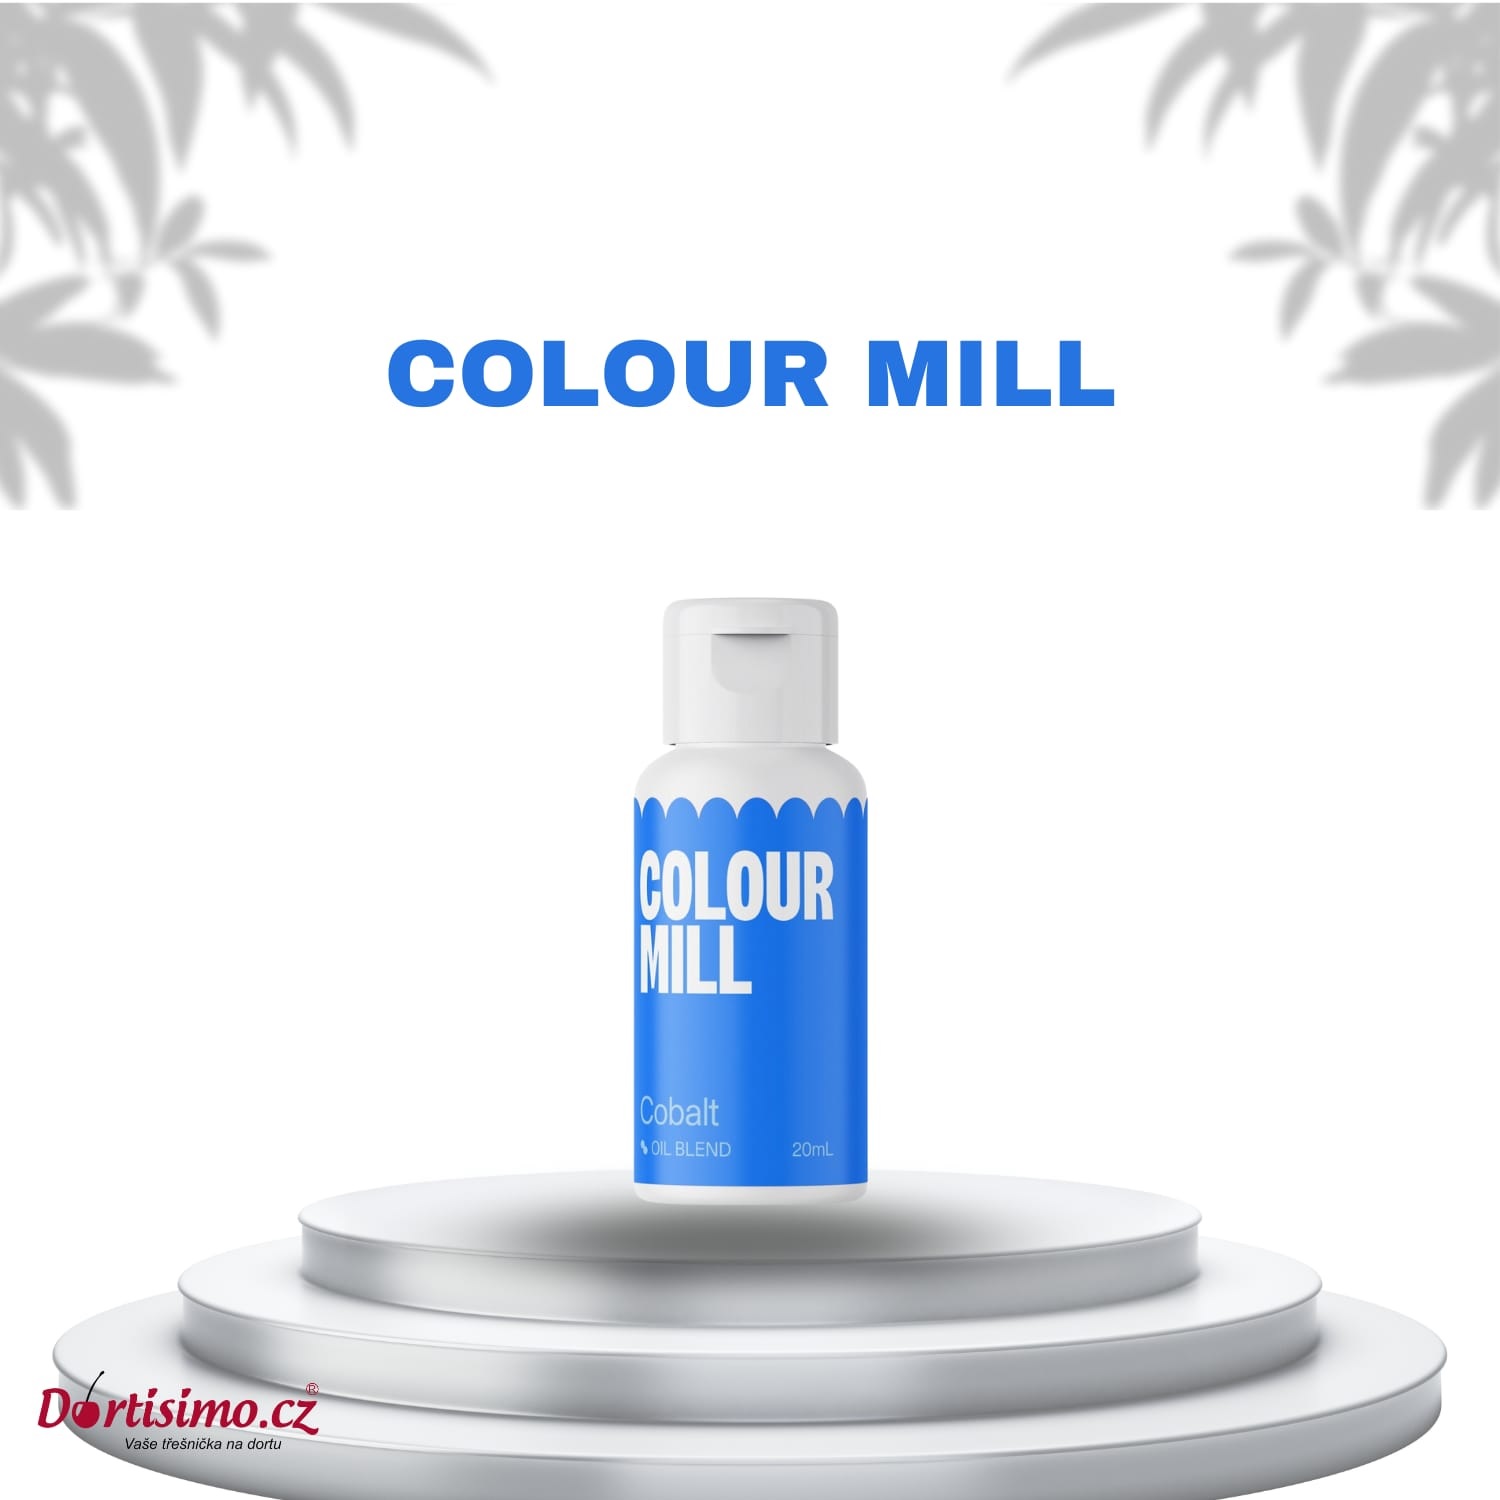 Obrázek k výrobku 23697 - Colour Mill olejová farba Cobalt (20ml)